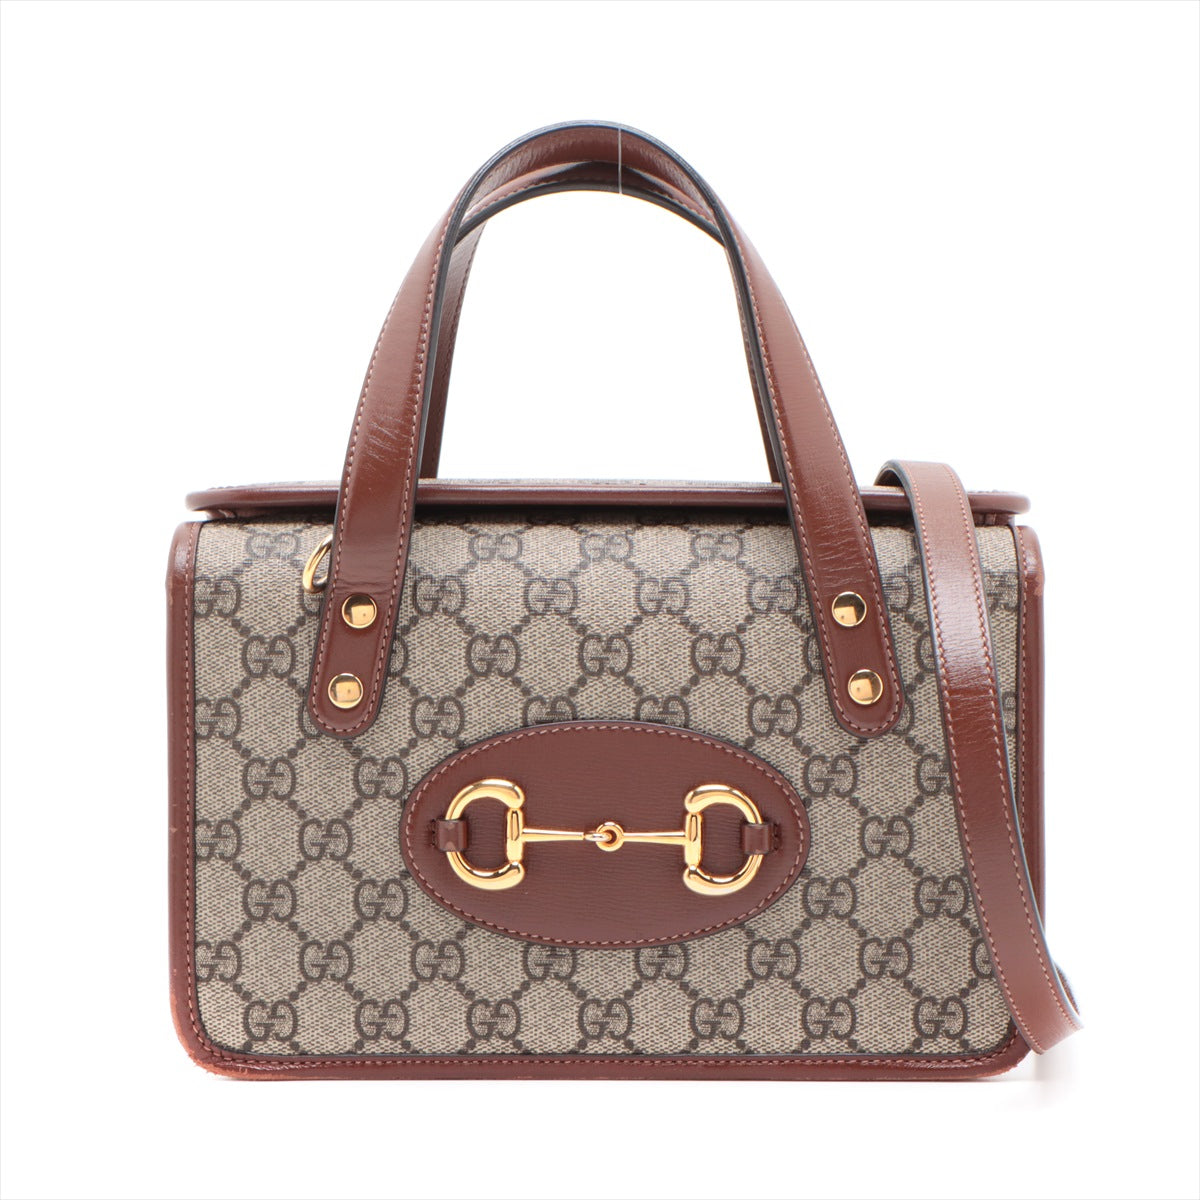 Gucci Horsebit GG Supreme 2way handbag Brown 645453